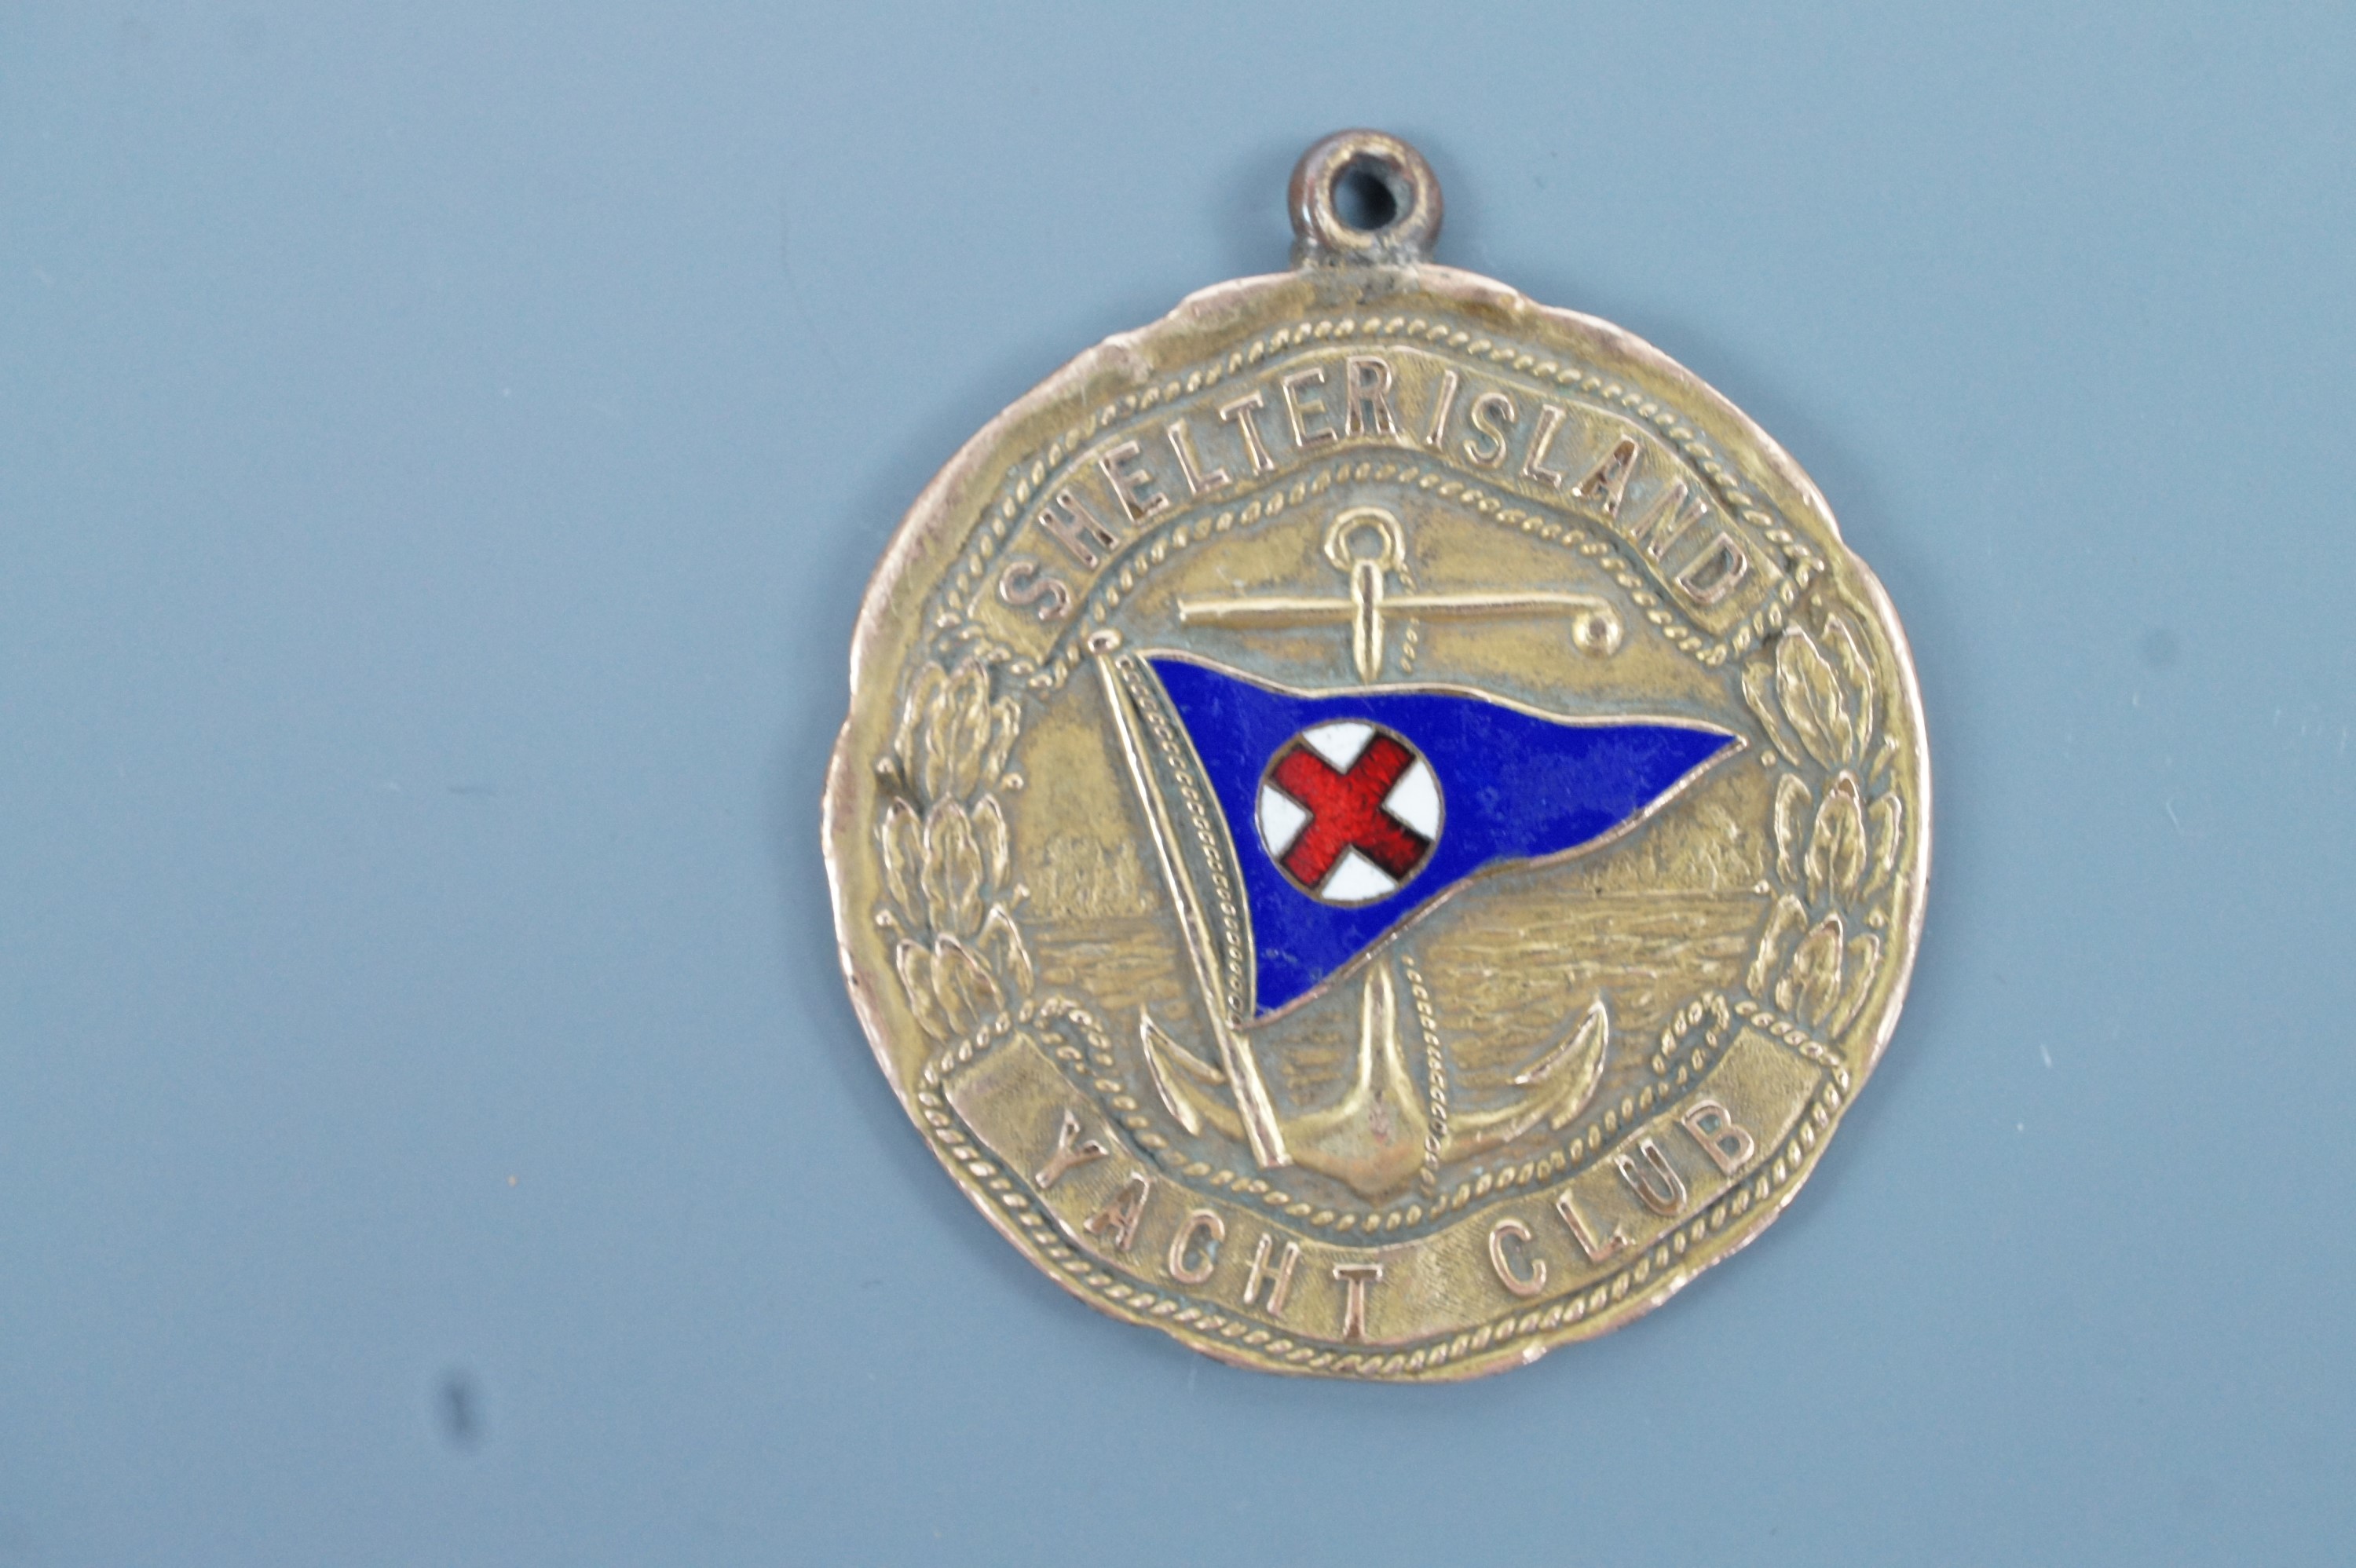 A 1913 US Shelter Island Yacht Club enamelled prize fob medallion, 33 mm